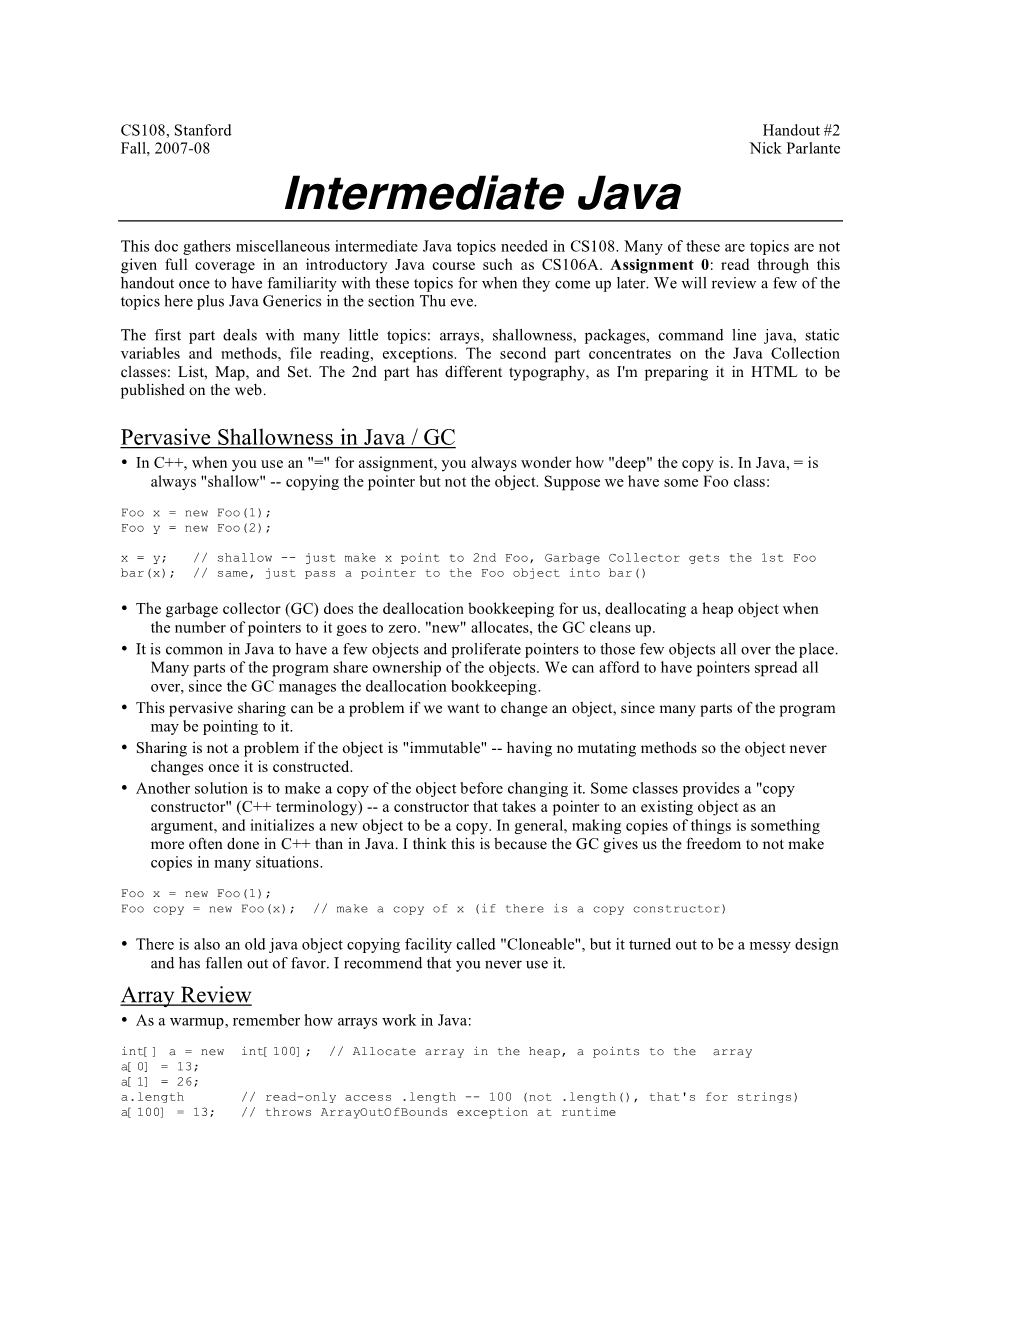 Intermediate Java